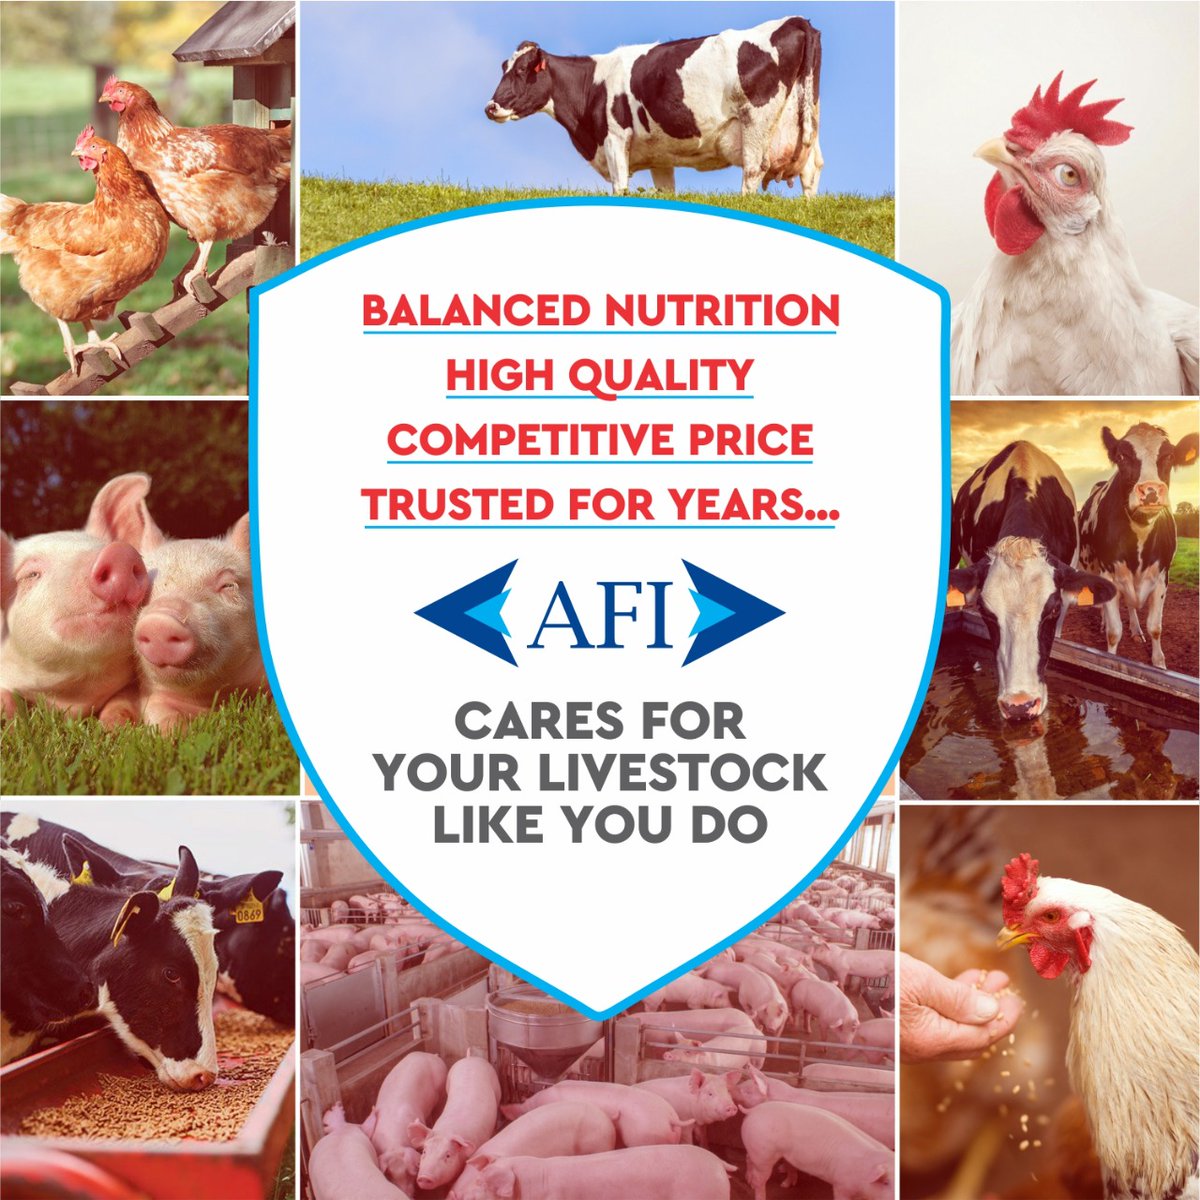 AFI, the feed that suits your own and your livestock's needs perfectly!
#Dairy #FeedingCattles #Feed #AnimalFeed #QualityFeed #AnimalHealth #MilkProduction #AnimalNutrition #Farming #IndianDairyFarmer #DairyIndustry #DairyFarmer #DairyFarming #Milk #Agriculture #MakingAnImpact